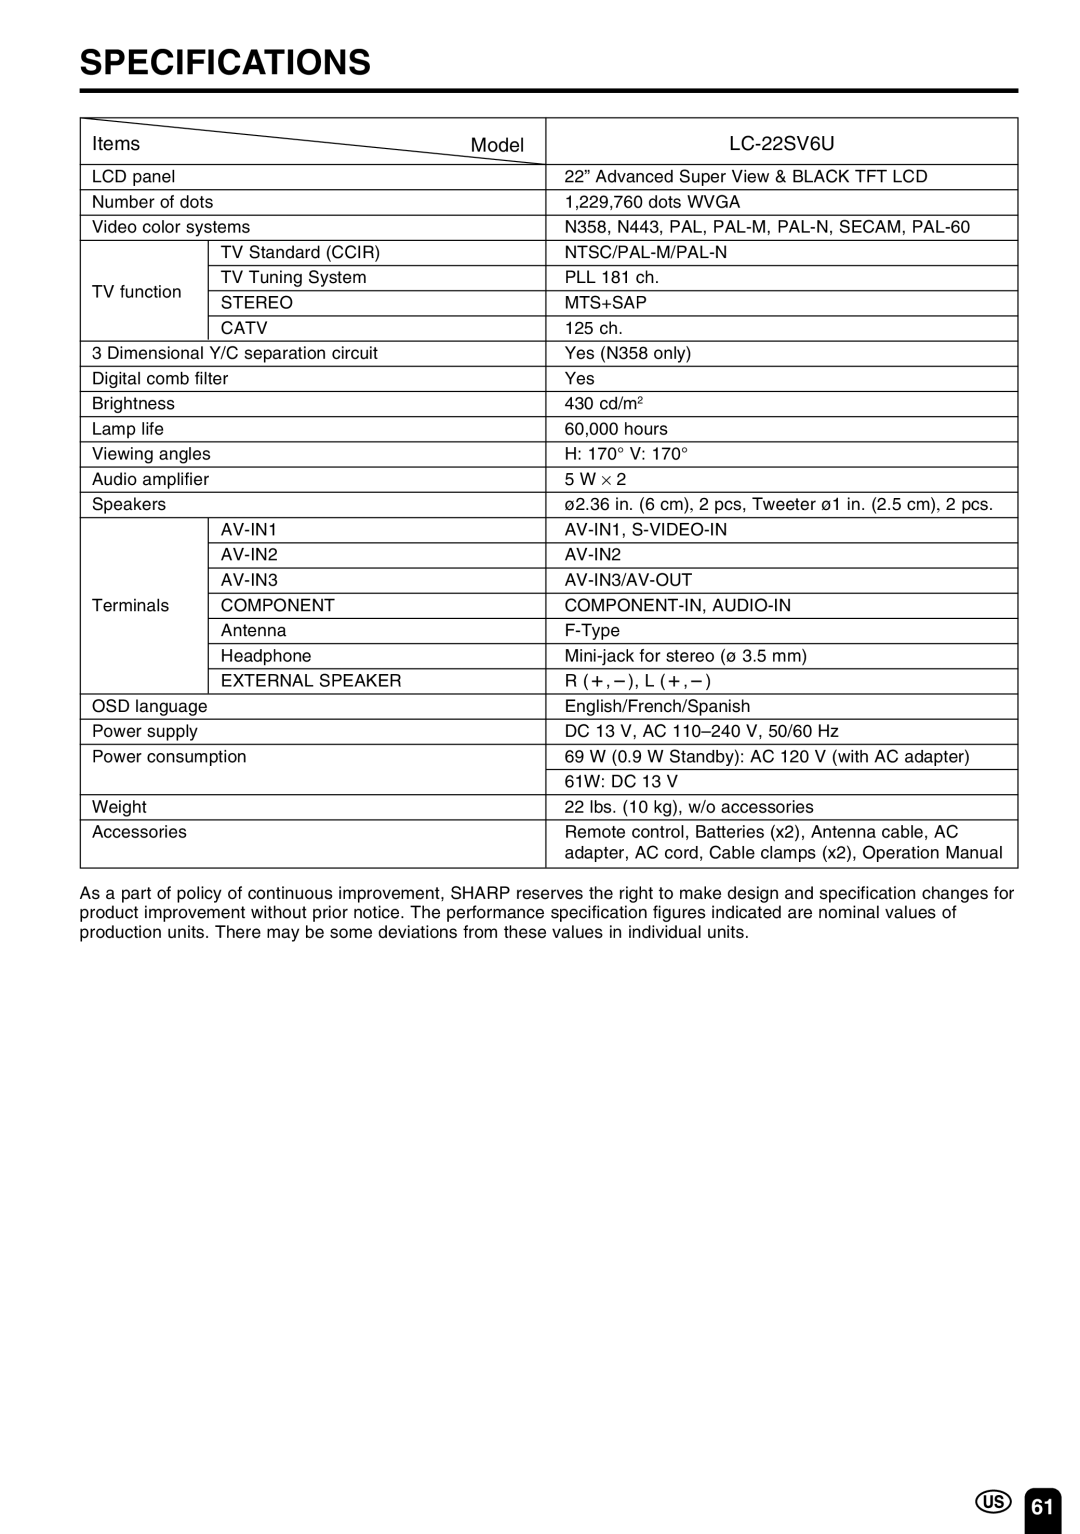 Sharp LC-22SV6U operation manual Specifications, Items, Model 